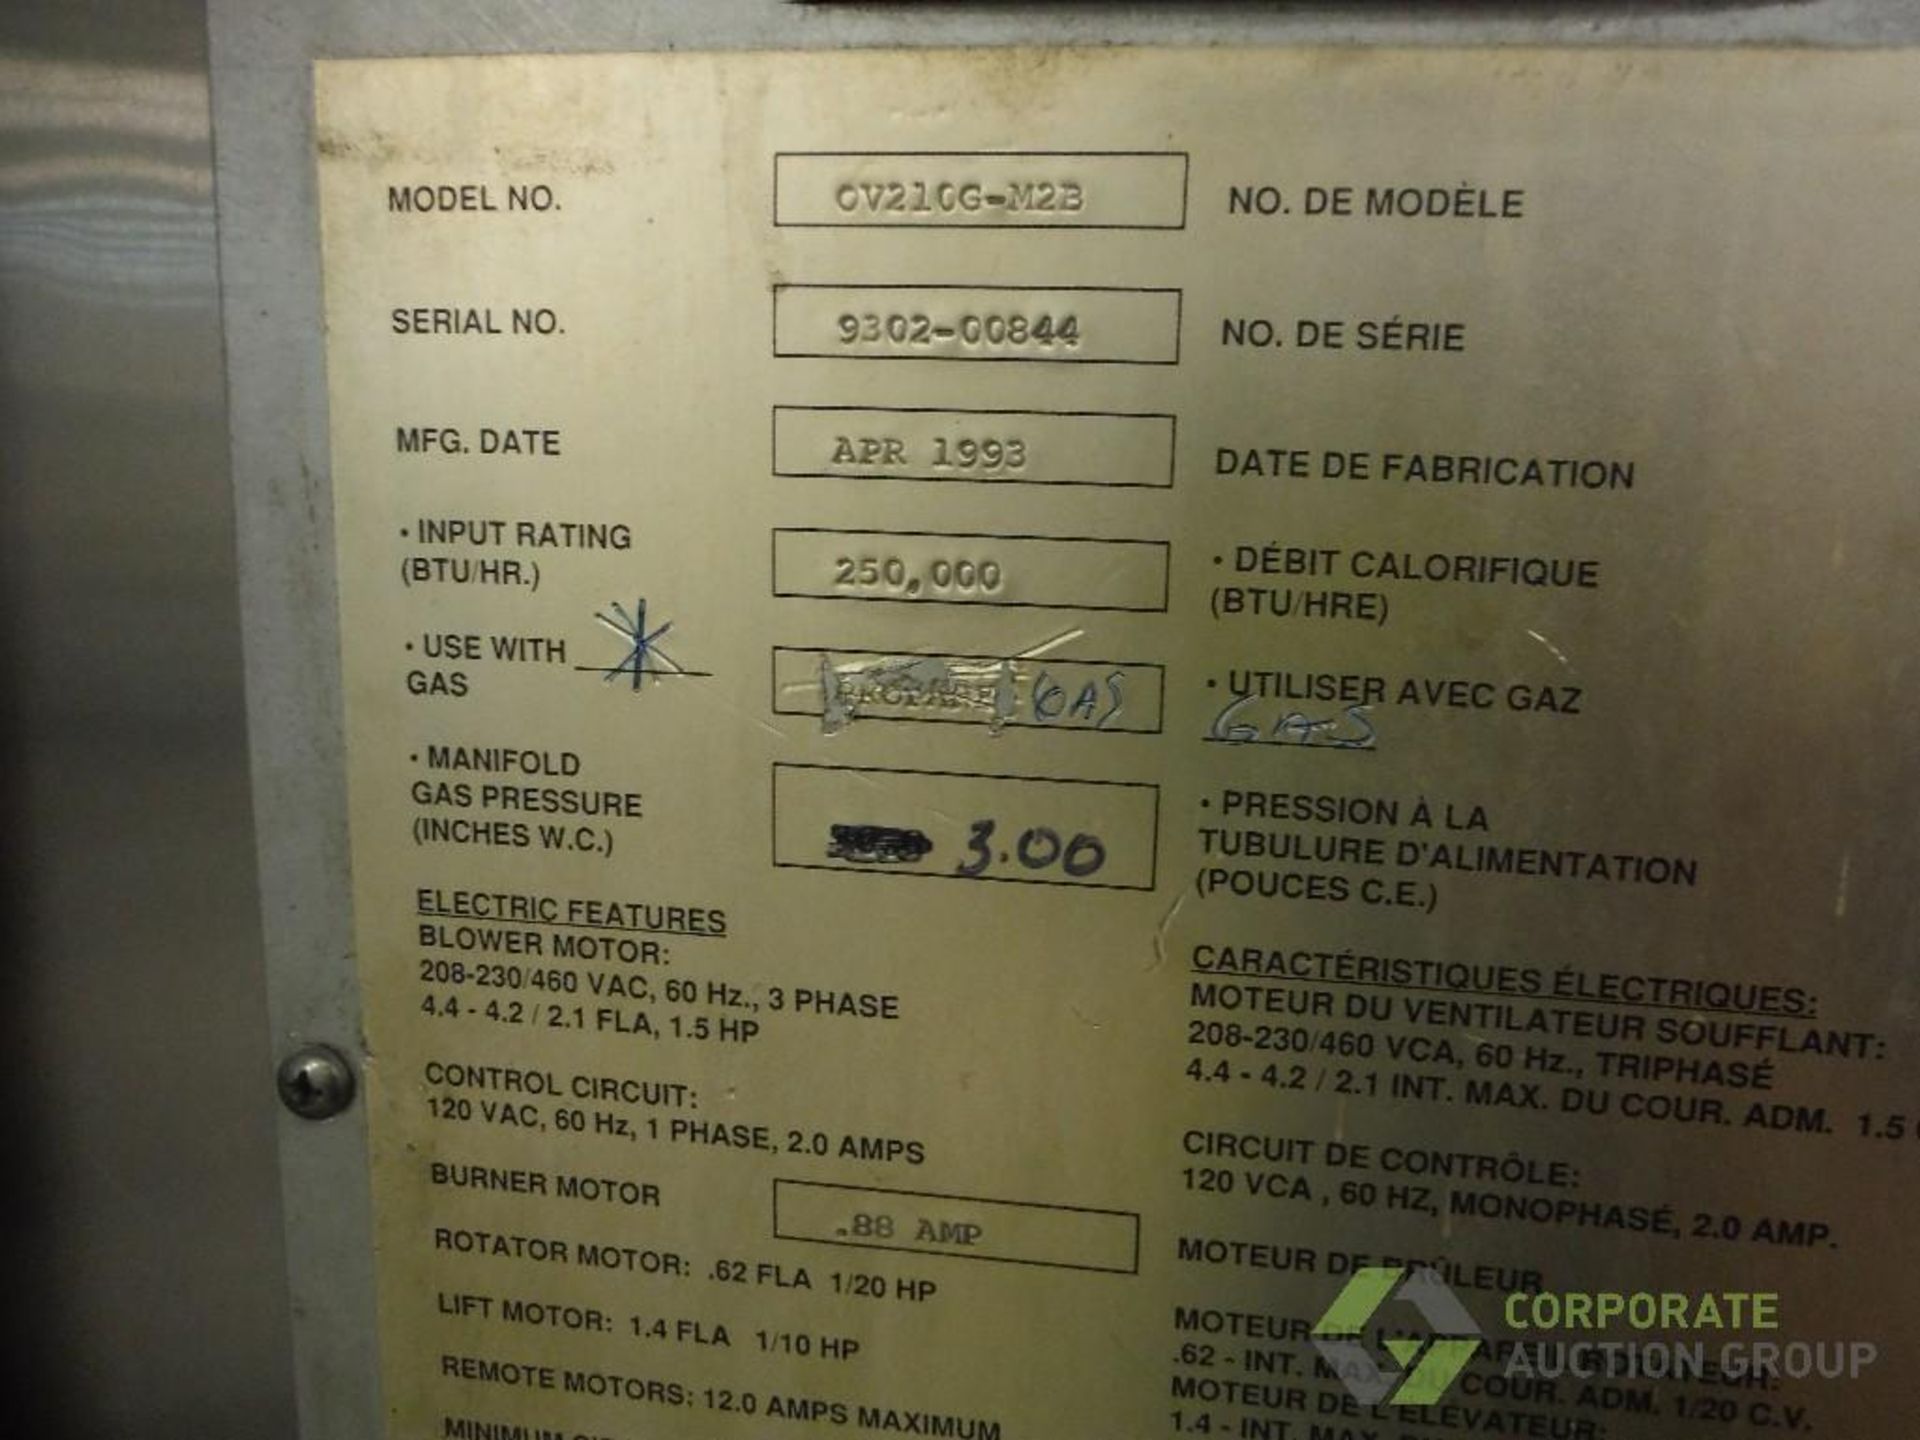 1993 Baxter double rack oven, Model OV210G-M2B, SN 9302-00844, natural gas, 250,000 btu/hr. - Image 7 of 8